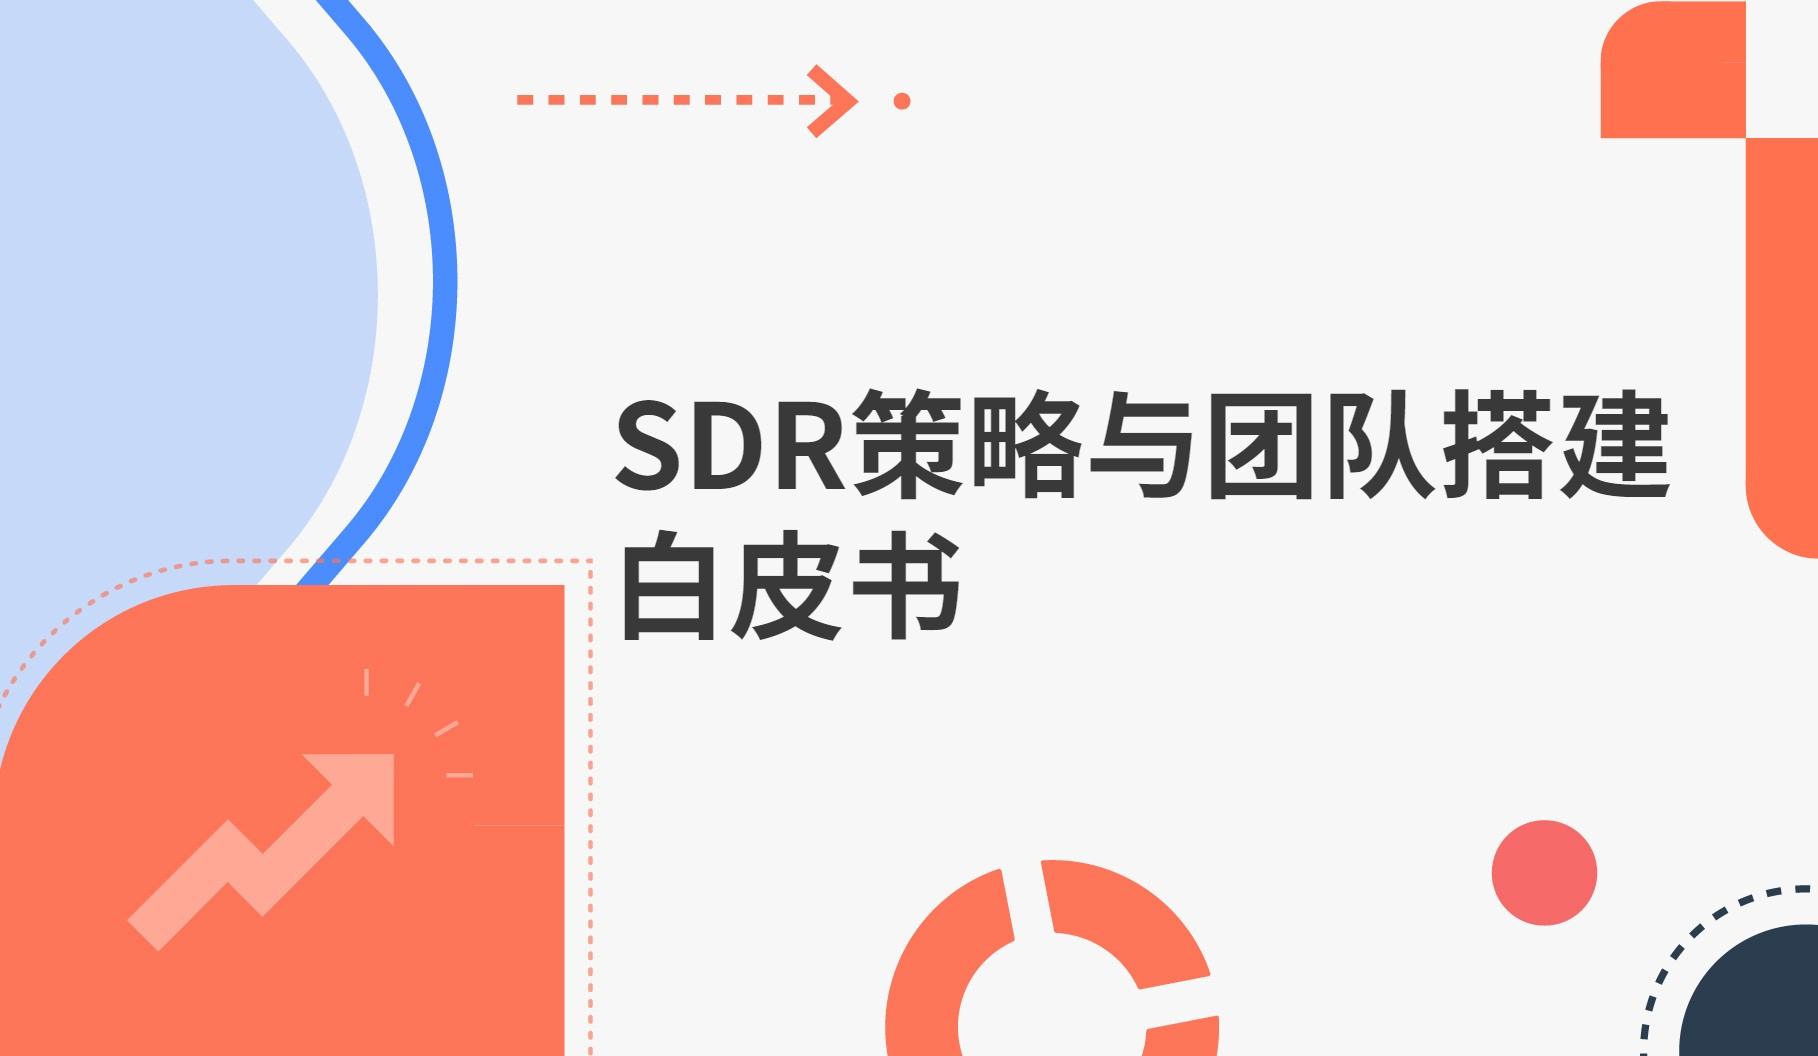 SDR(xiaoshoukaifadaibiao)celueyutuanduidajianbaipishu-352.jpg